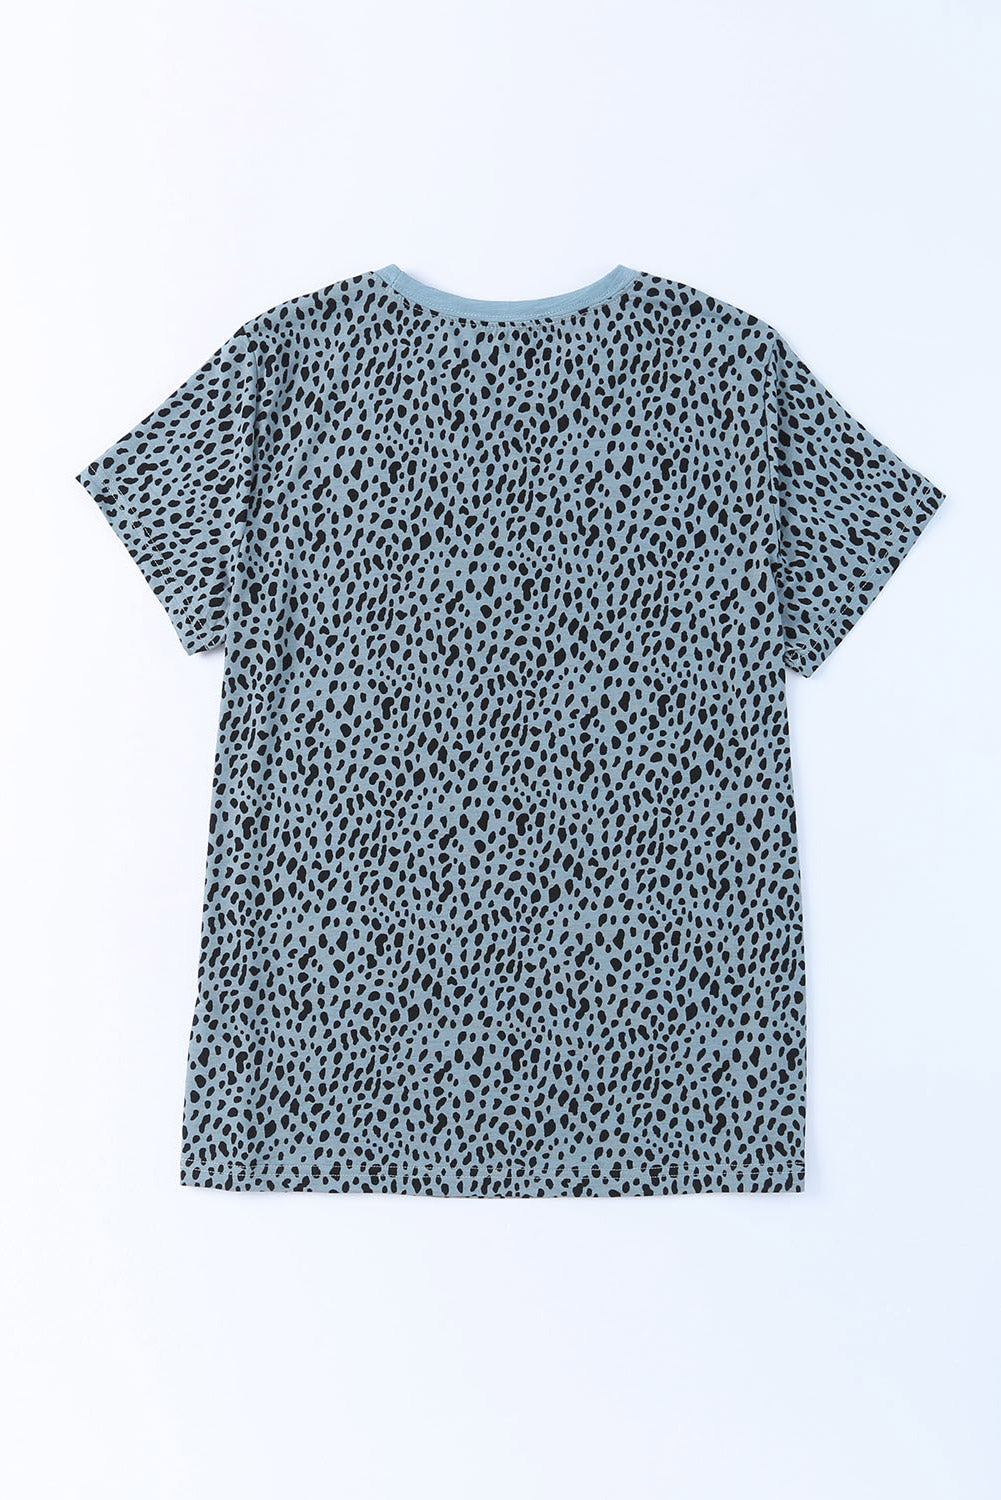 Animal Print Round Neck Short Sleeve T-Shirt